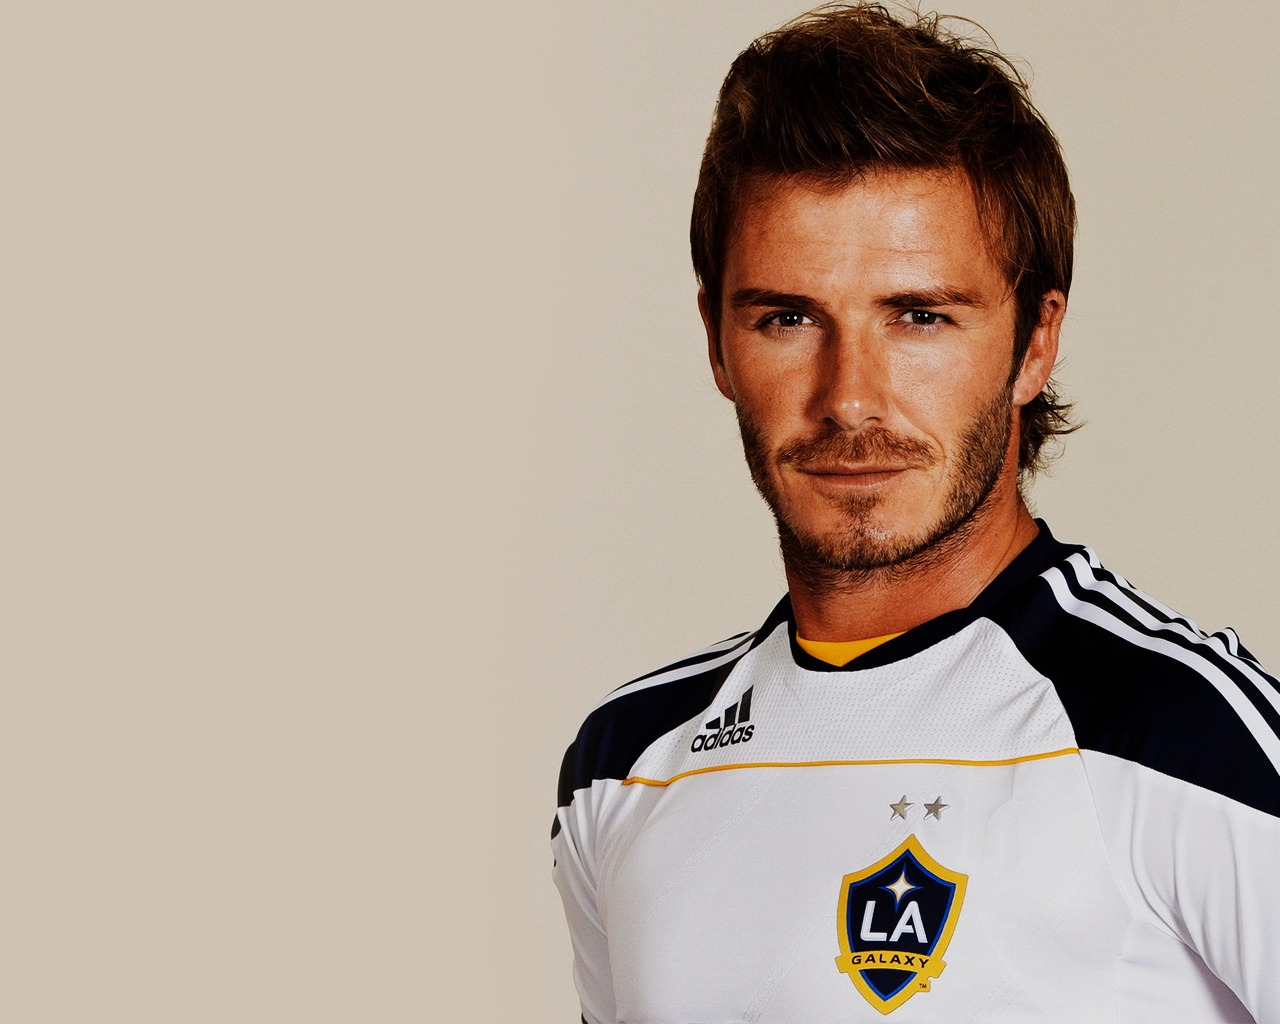 David Beckham Smile for 1280 x 1024 resolution